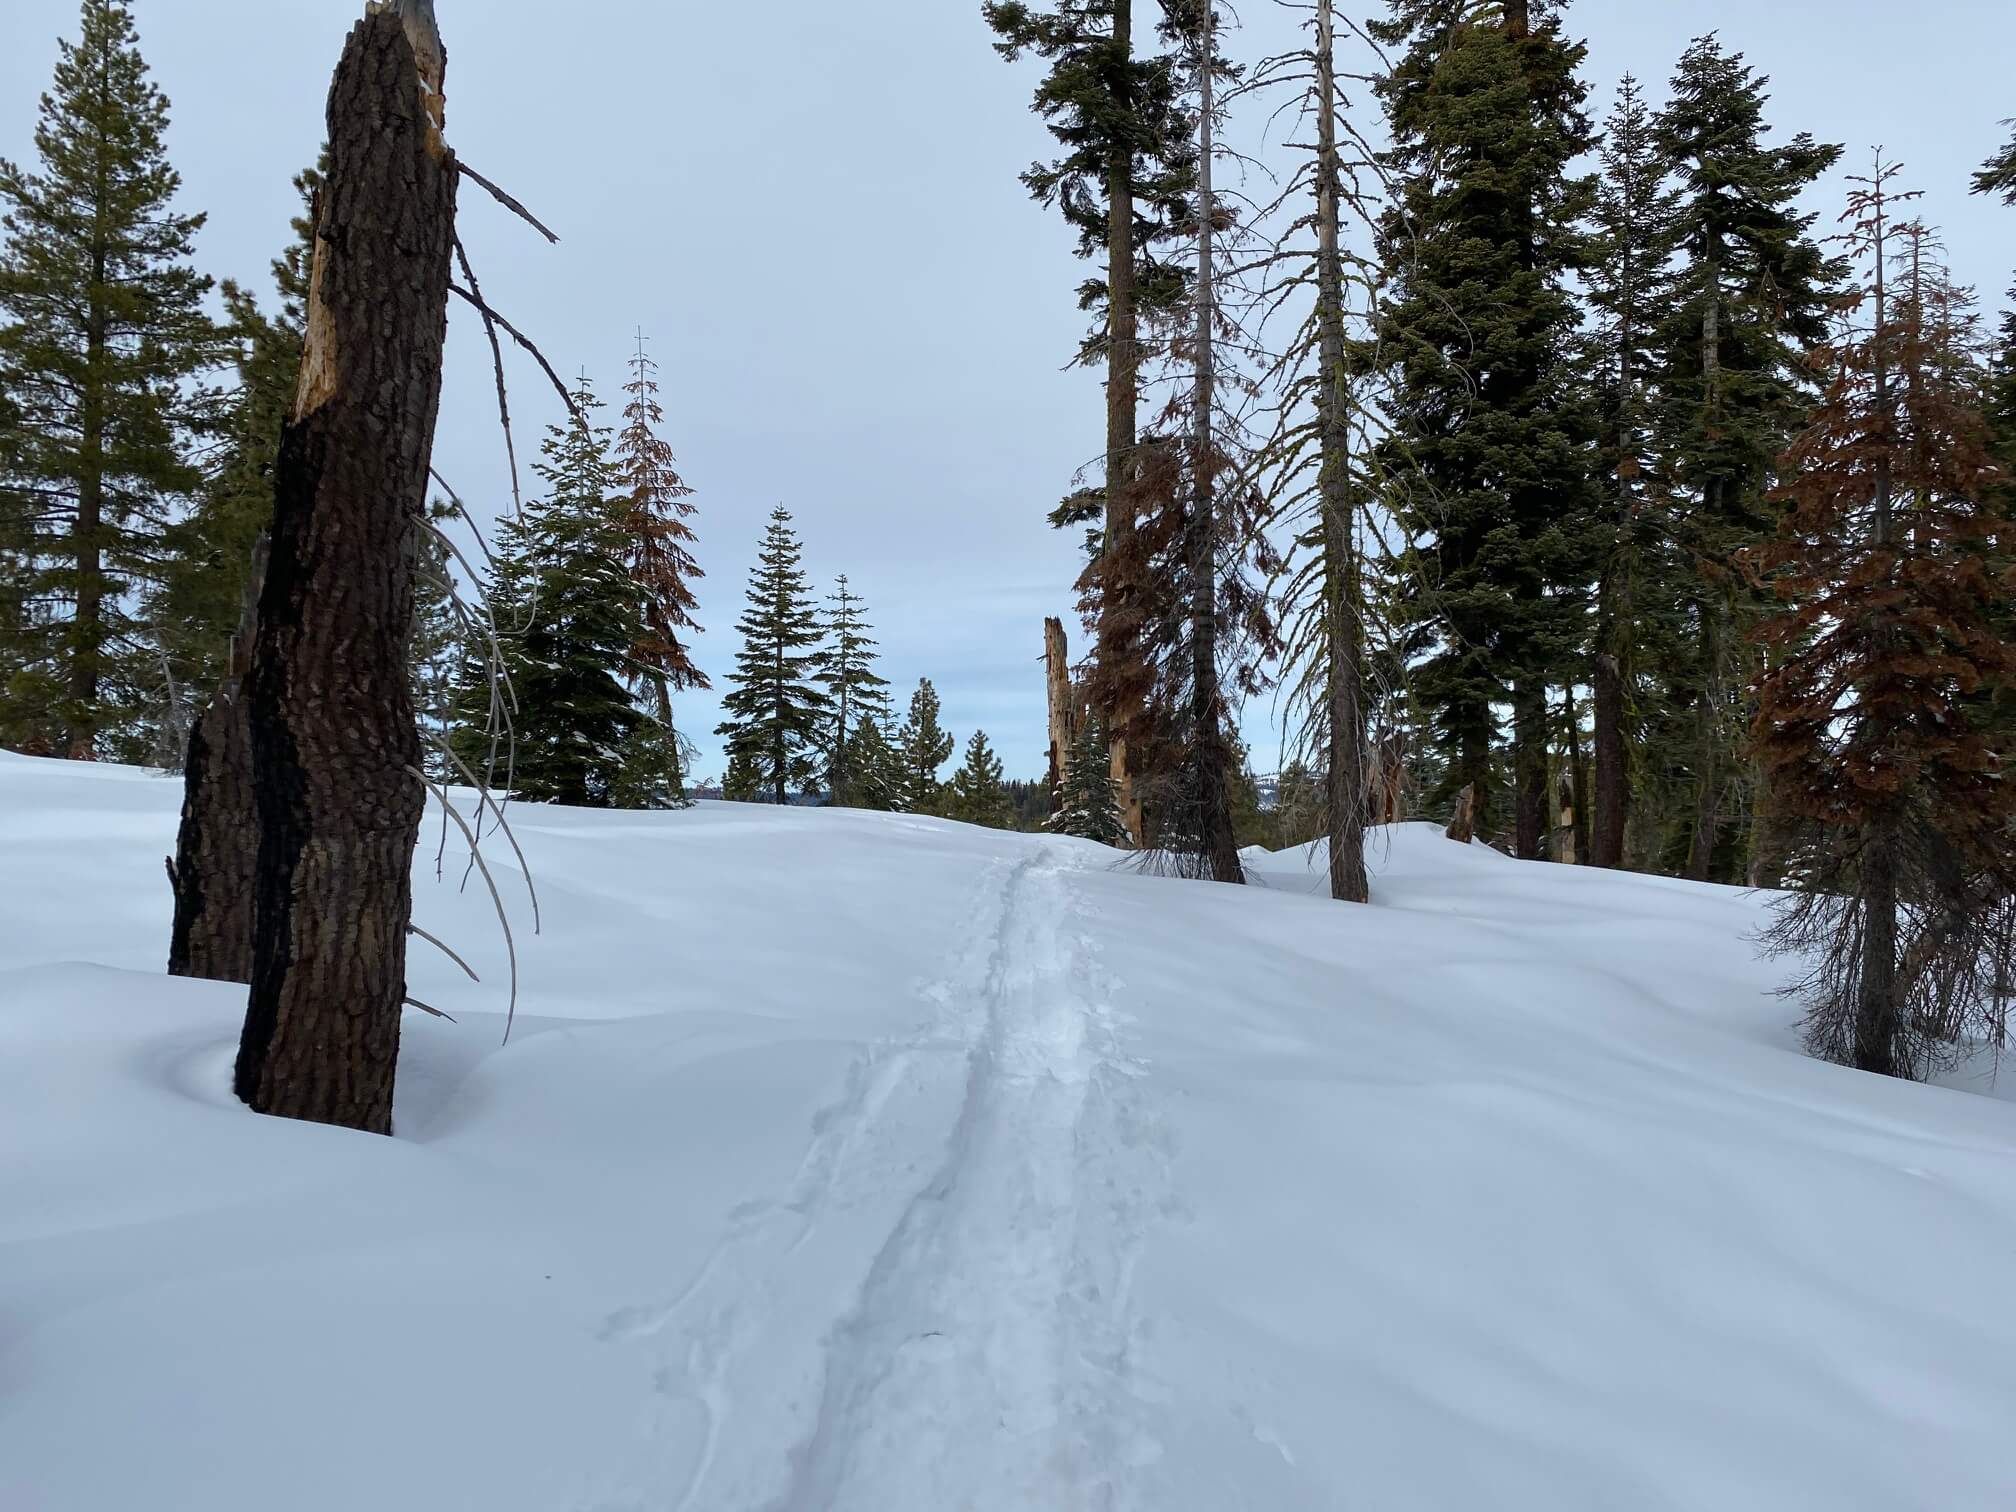 Hiking in the snow in Yosemite